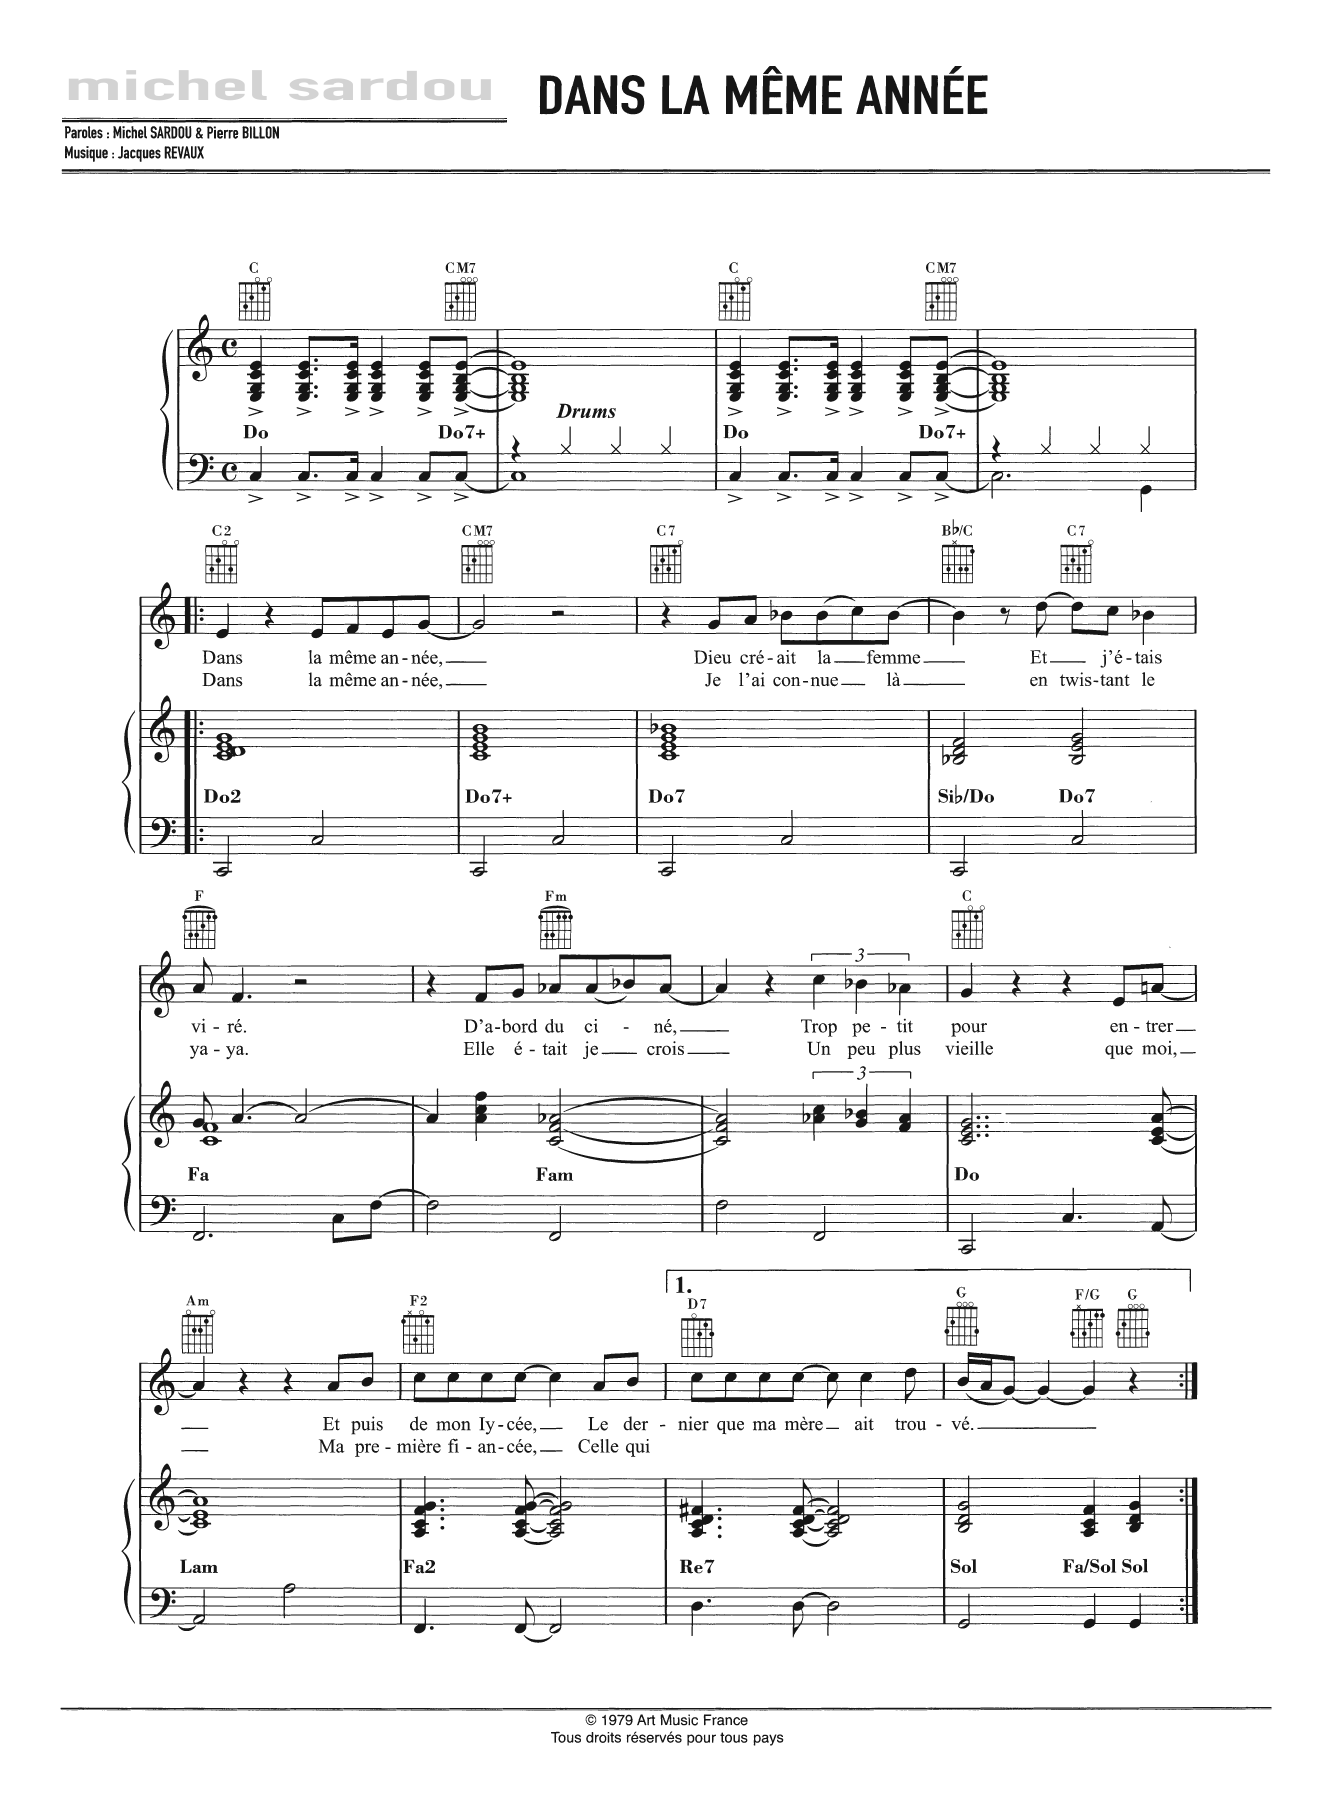 Michel Sardou Dans La Meme Annee Sheet Music Notes & Chords for Piano, Vocal & Guitar - Download or Print PDF